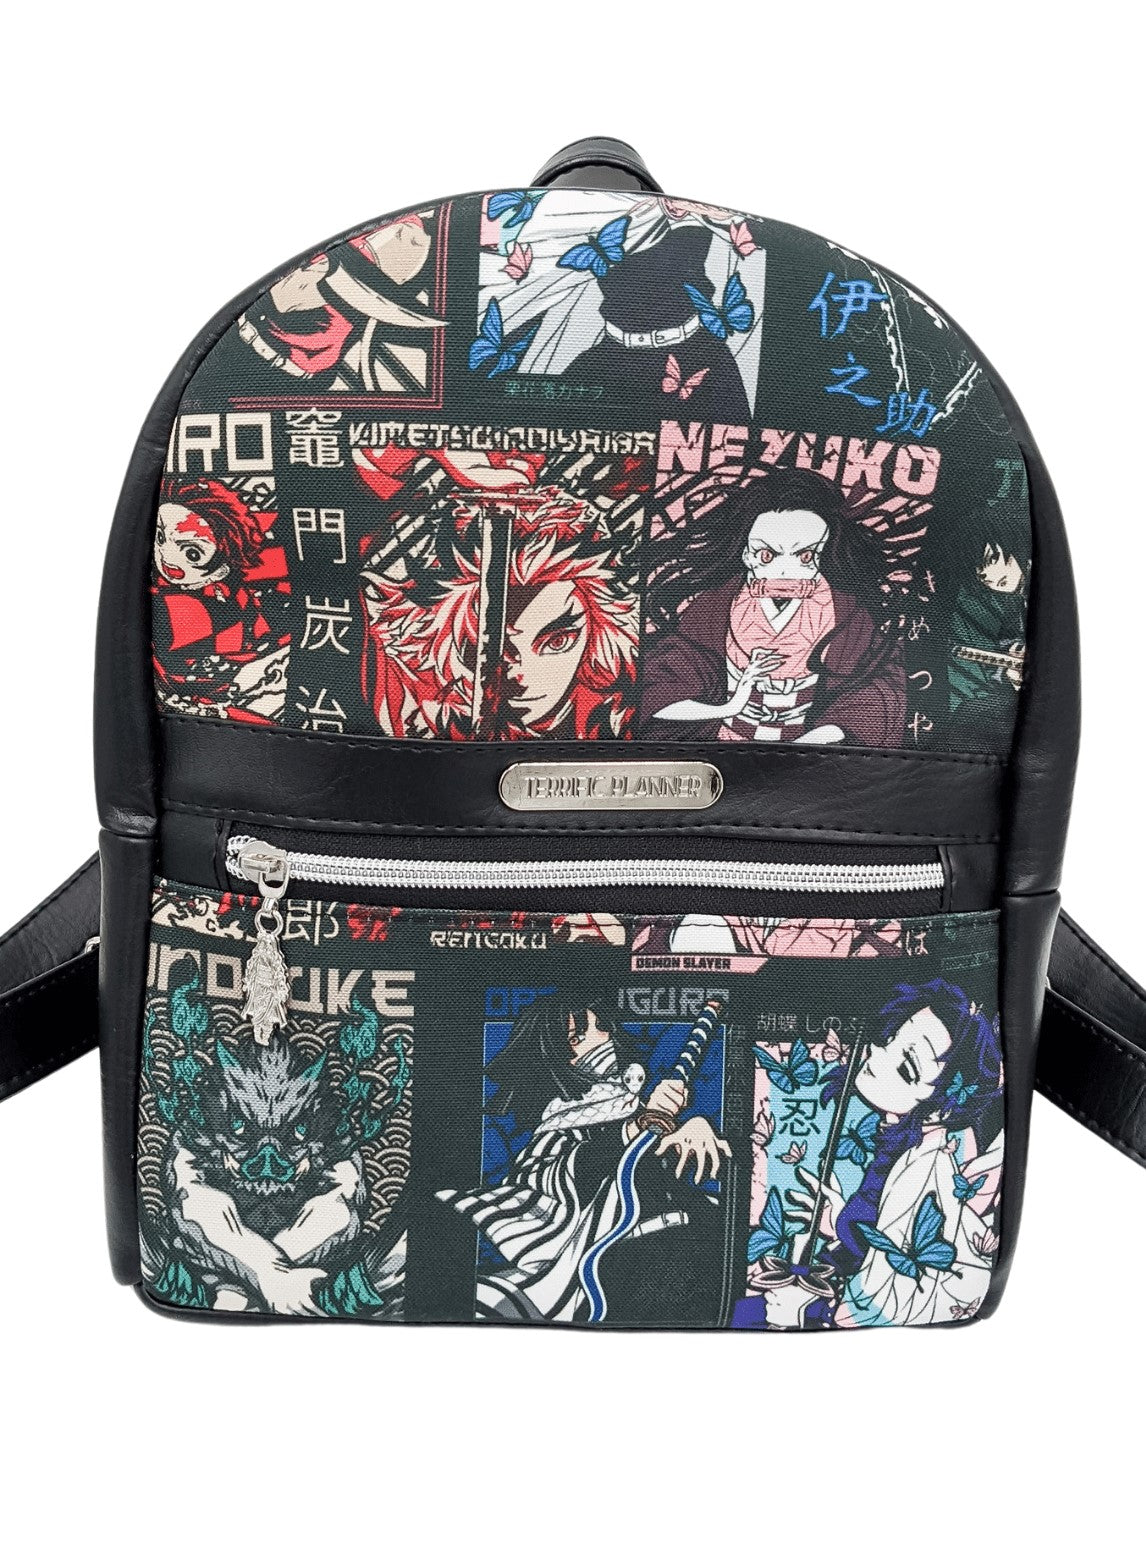 Demon Slayer Mini Backpack